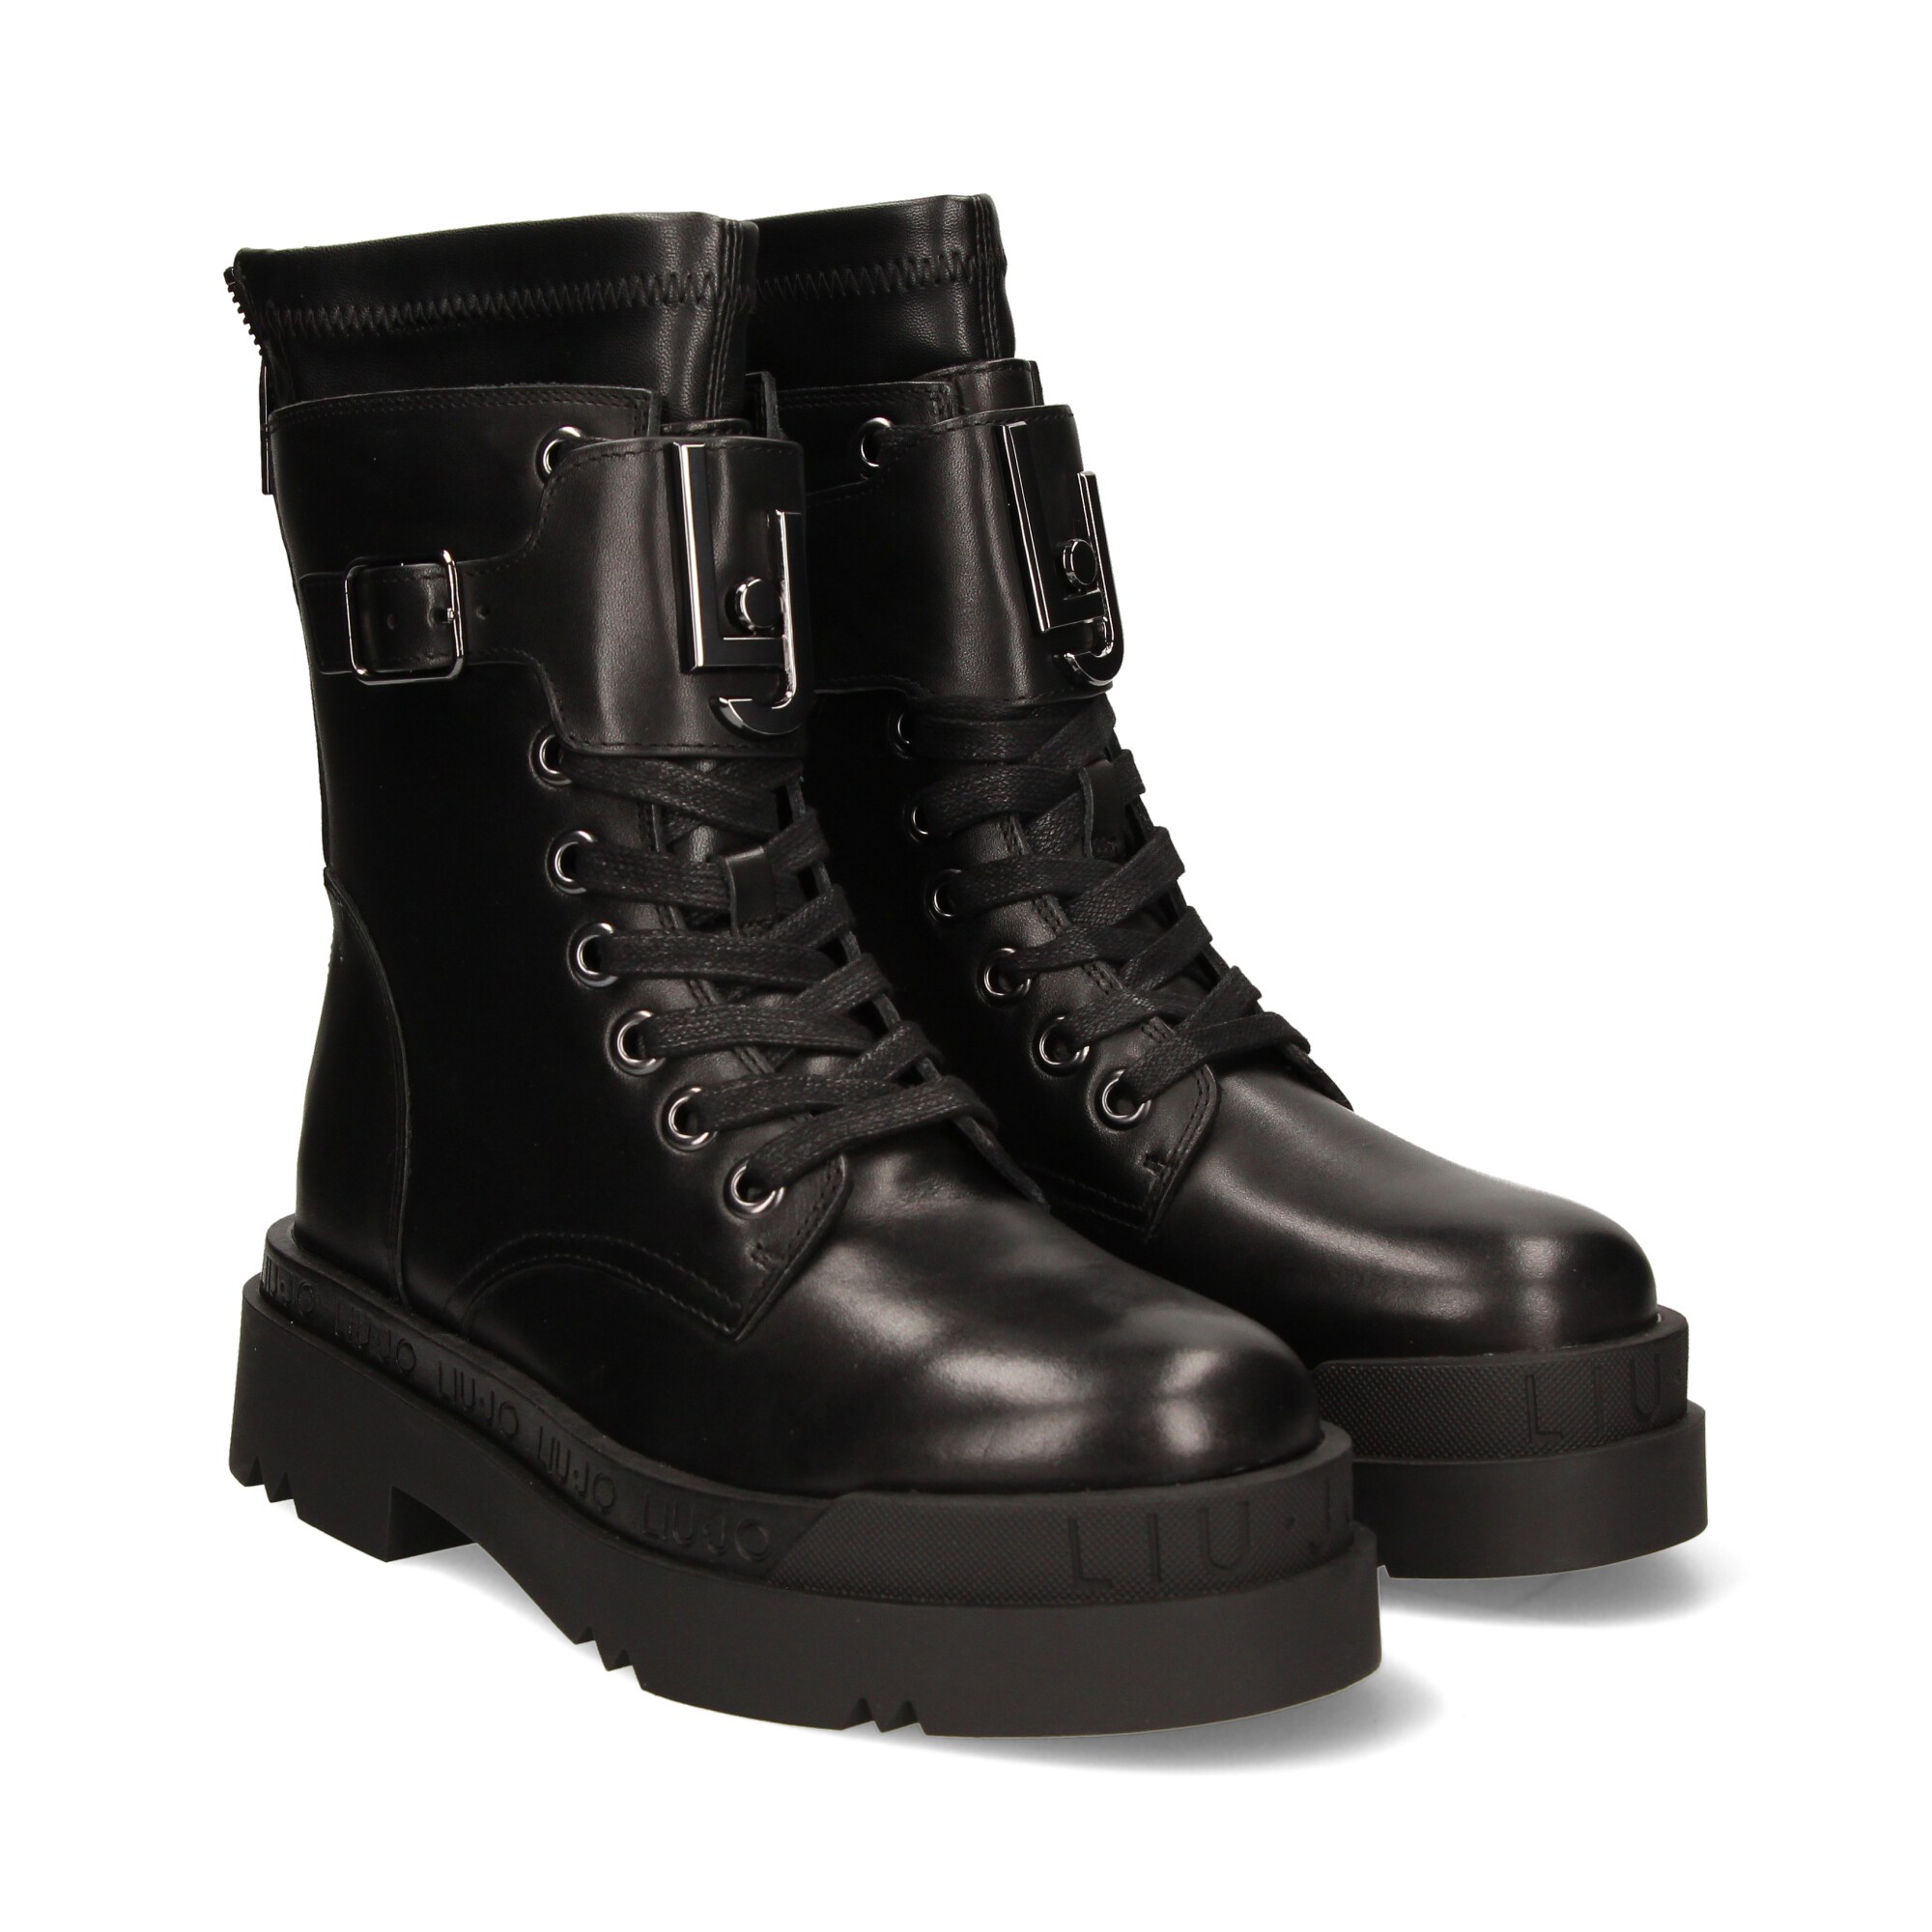 military-boot-black-leather-pocket-lj